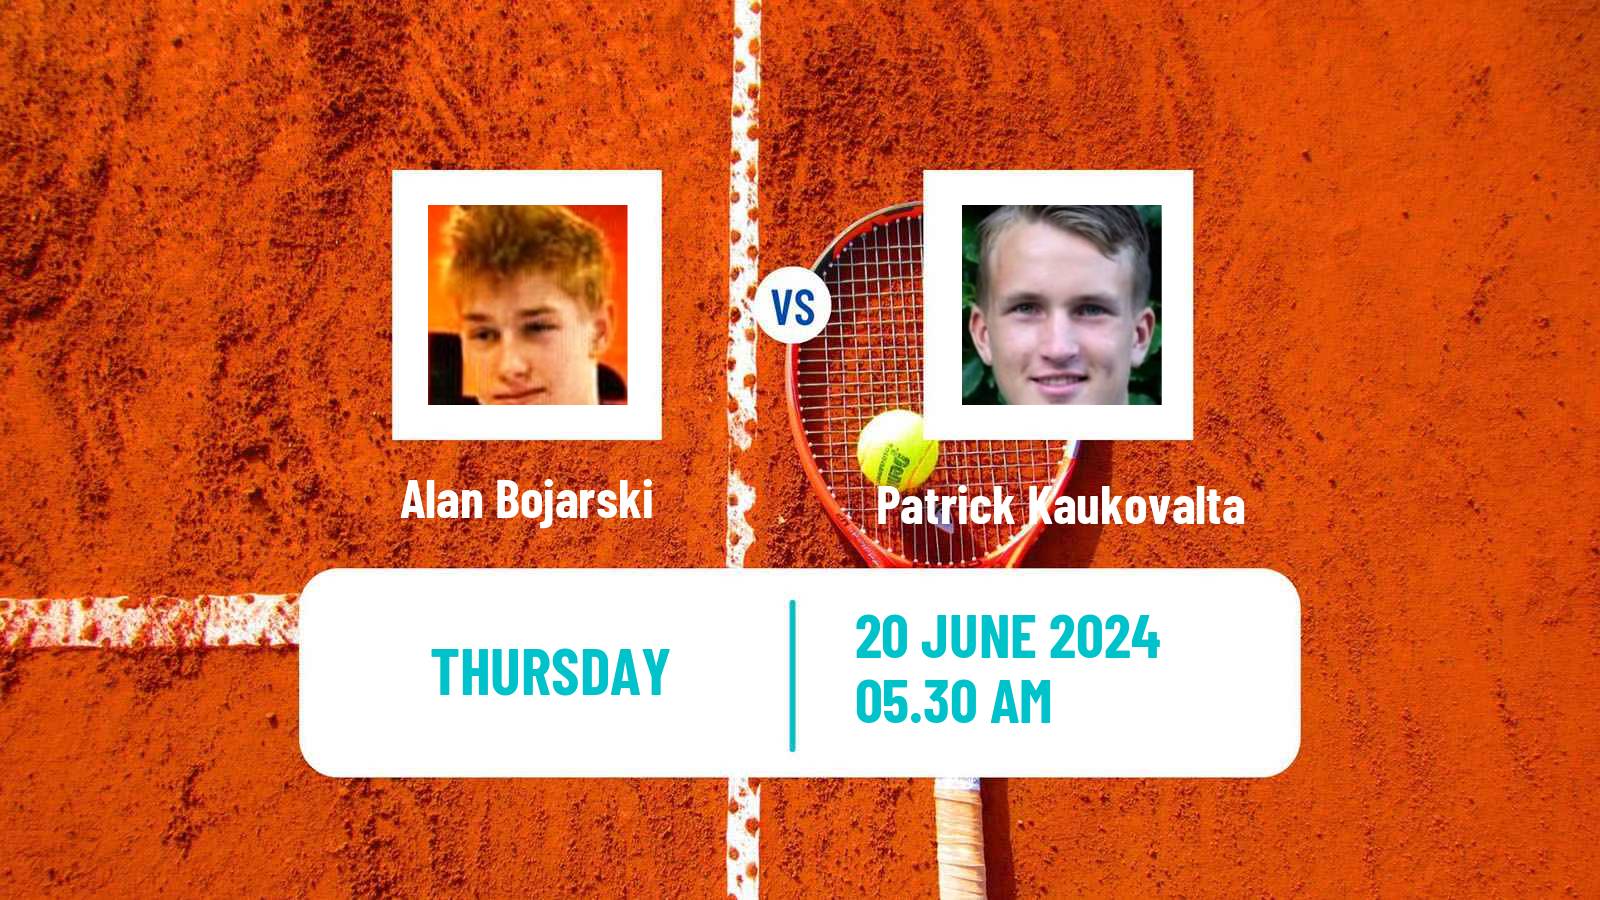 Tennis ITF M15 Koszalin 2 Men Alan Bojarski - Patrick Kaukovalta